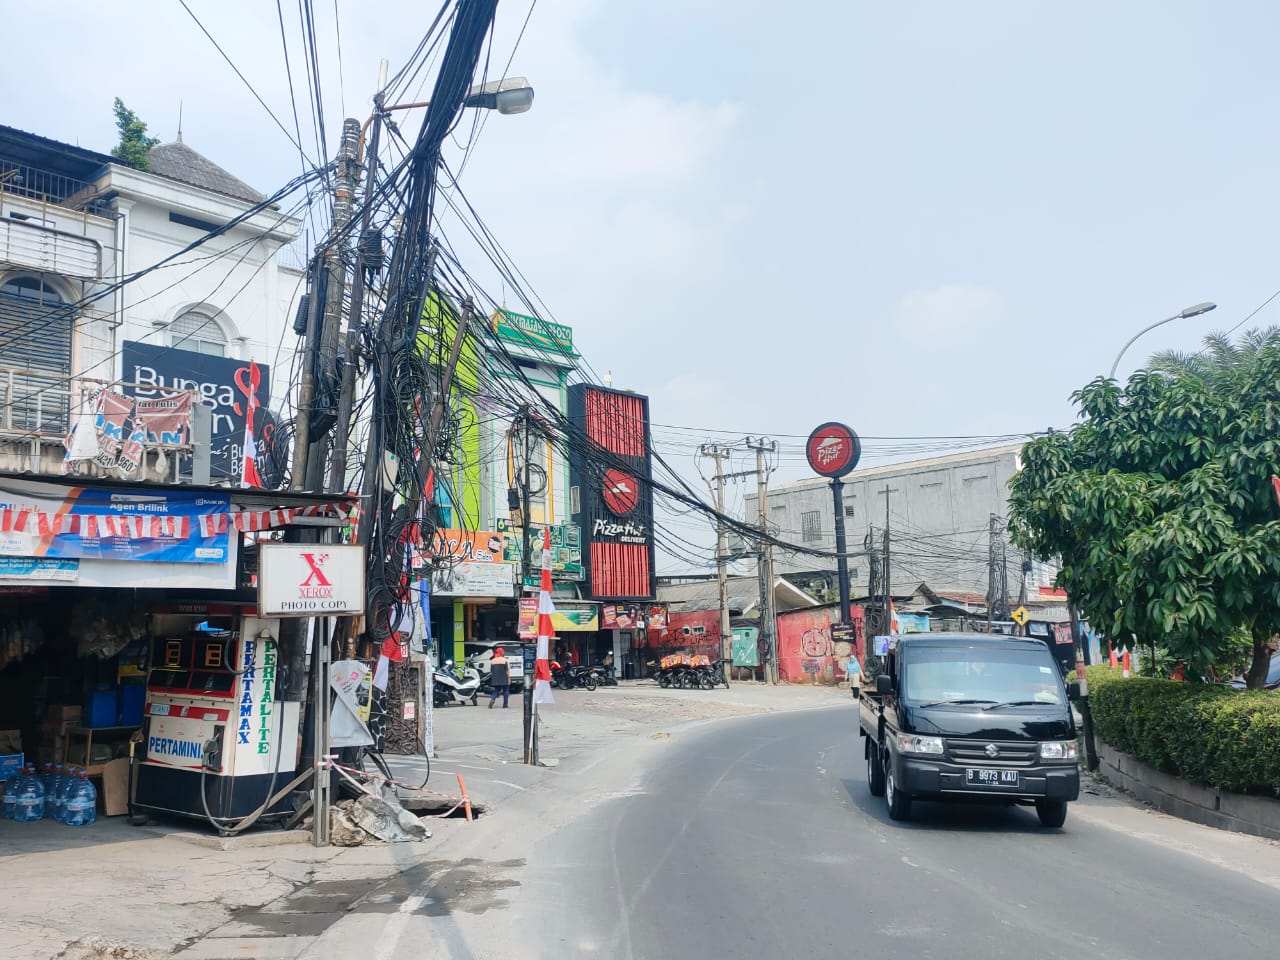 Sebabkan Celaka, Kabel Semrawut di Sekitaran Jalan Depok Bisa Dilaporkan